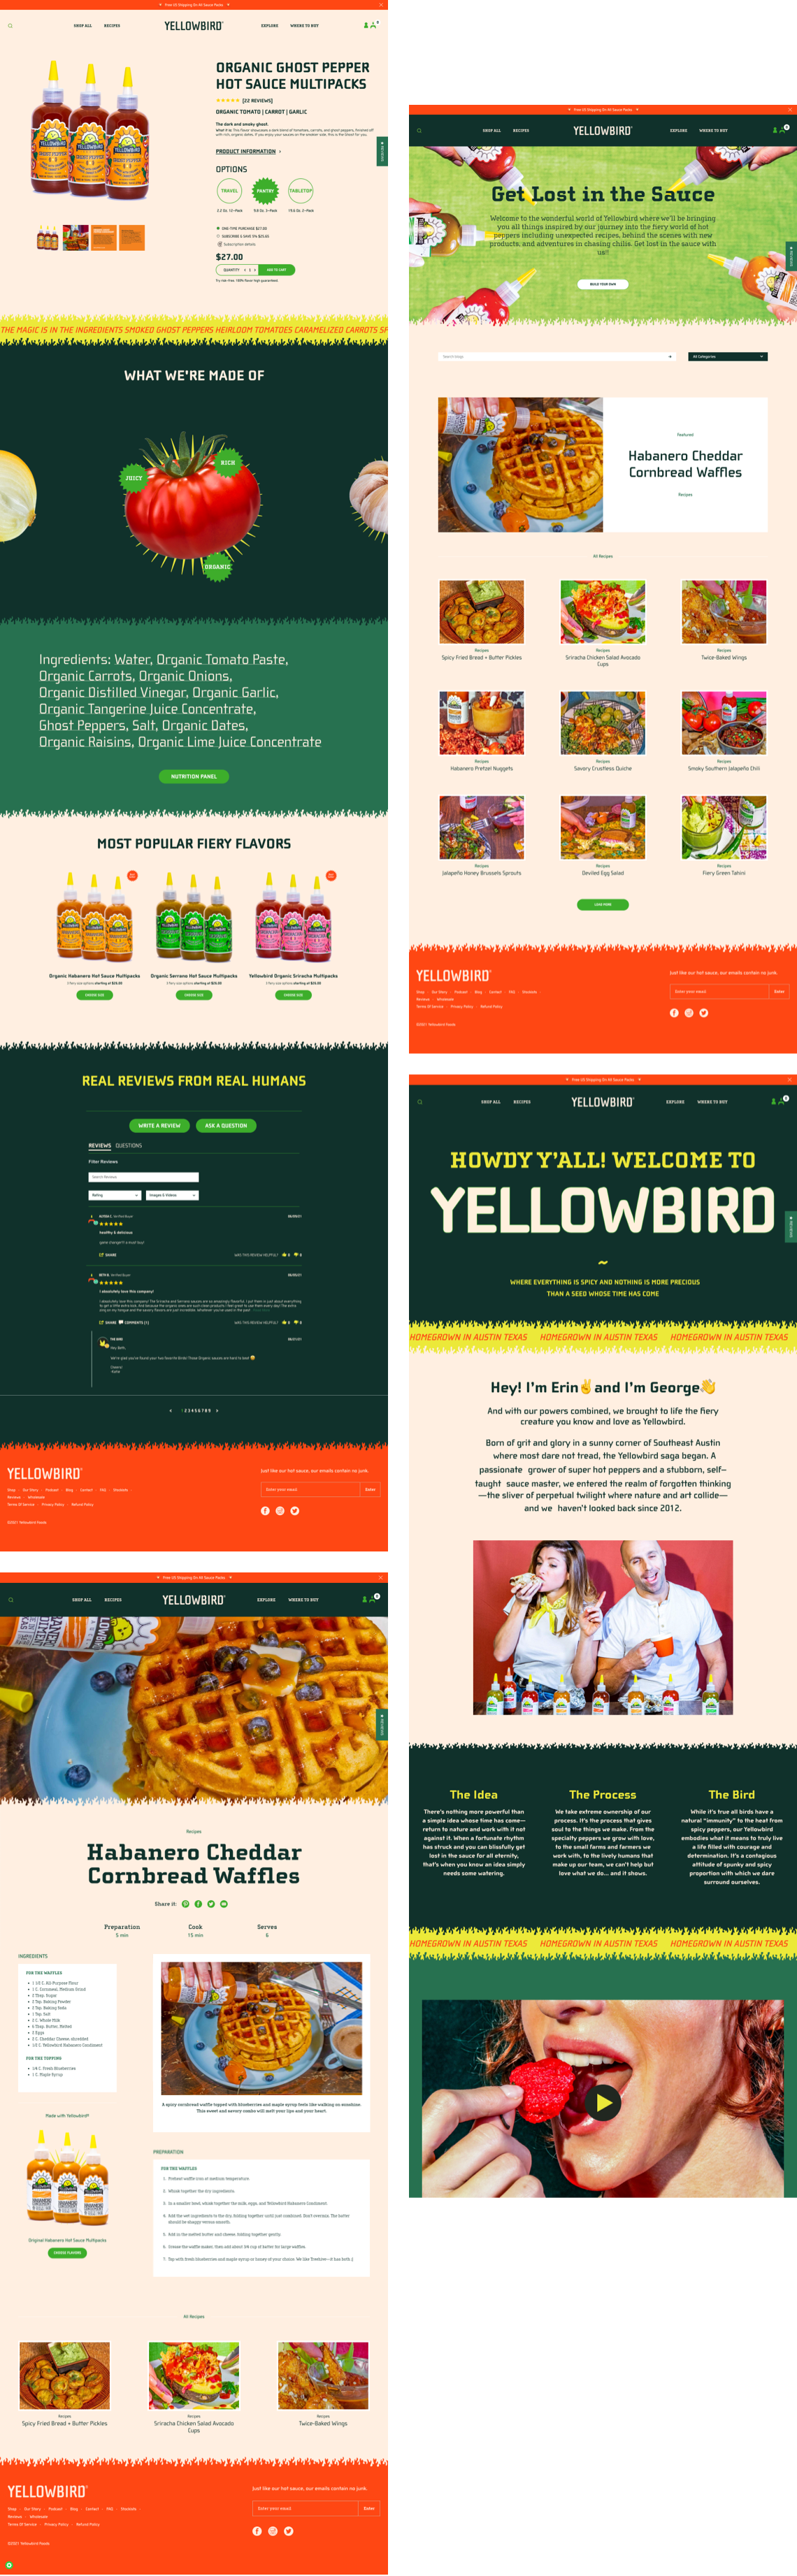 Yellowbird Sauce - Interiors